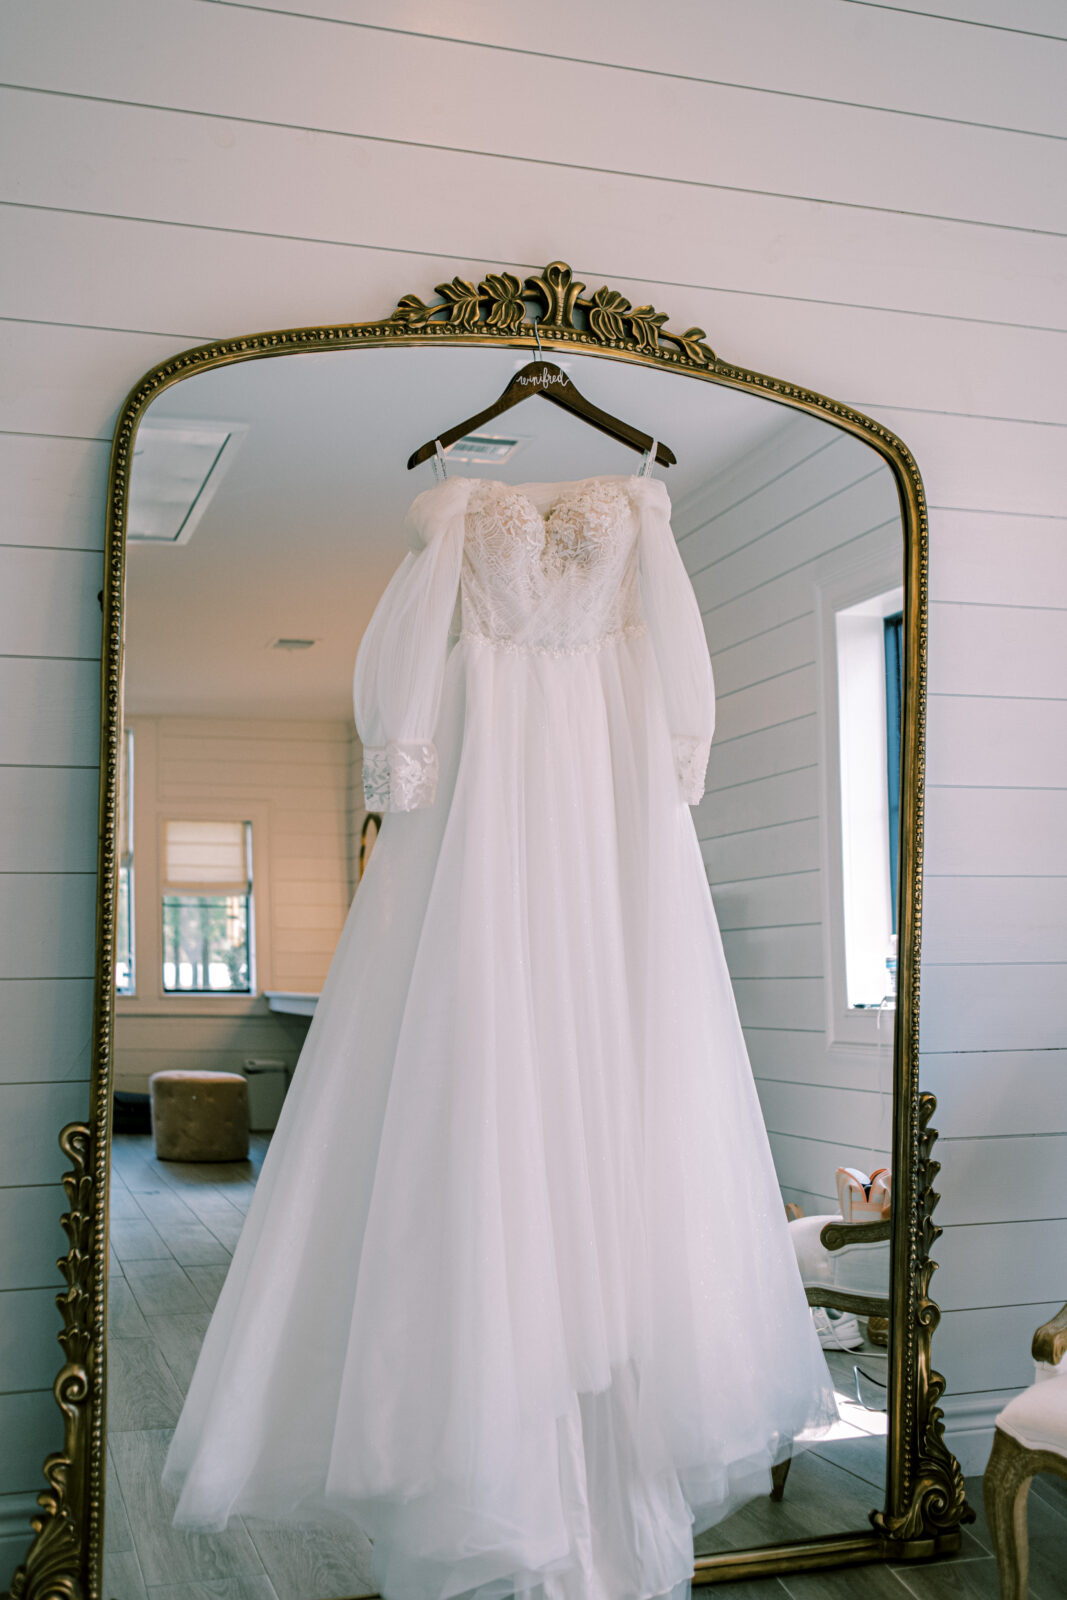 Bridgerton Inspired Wedding Dress at by Houston Wedding Photographer Mercie B Studio